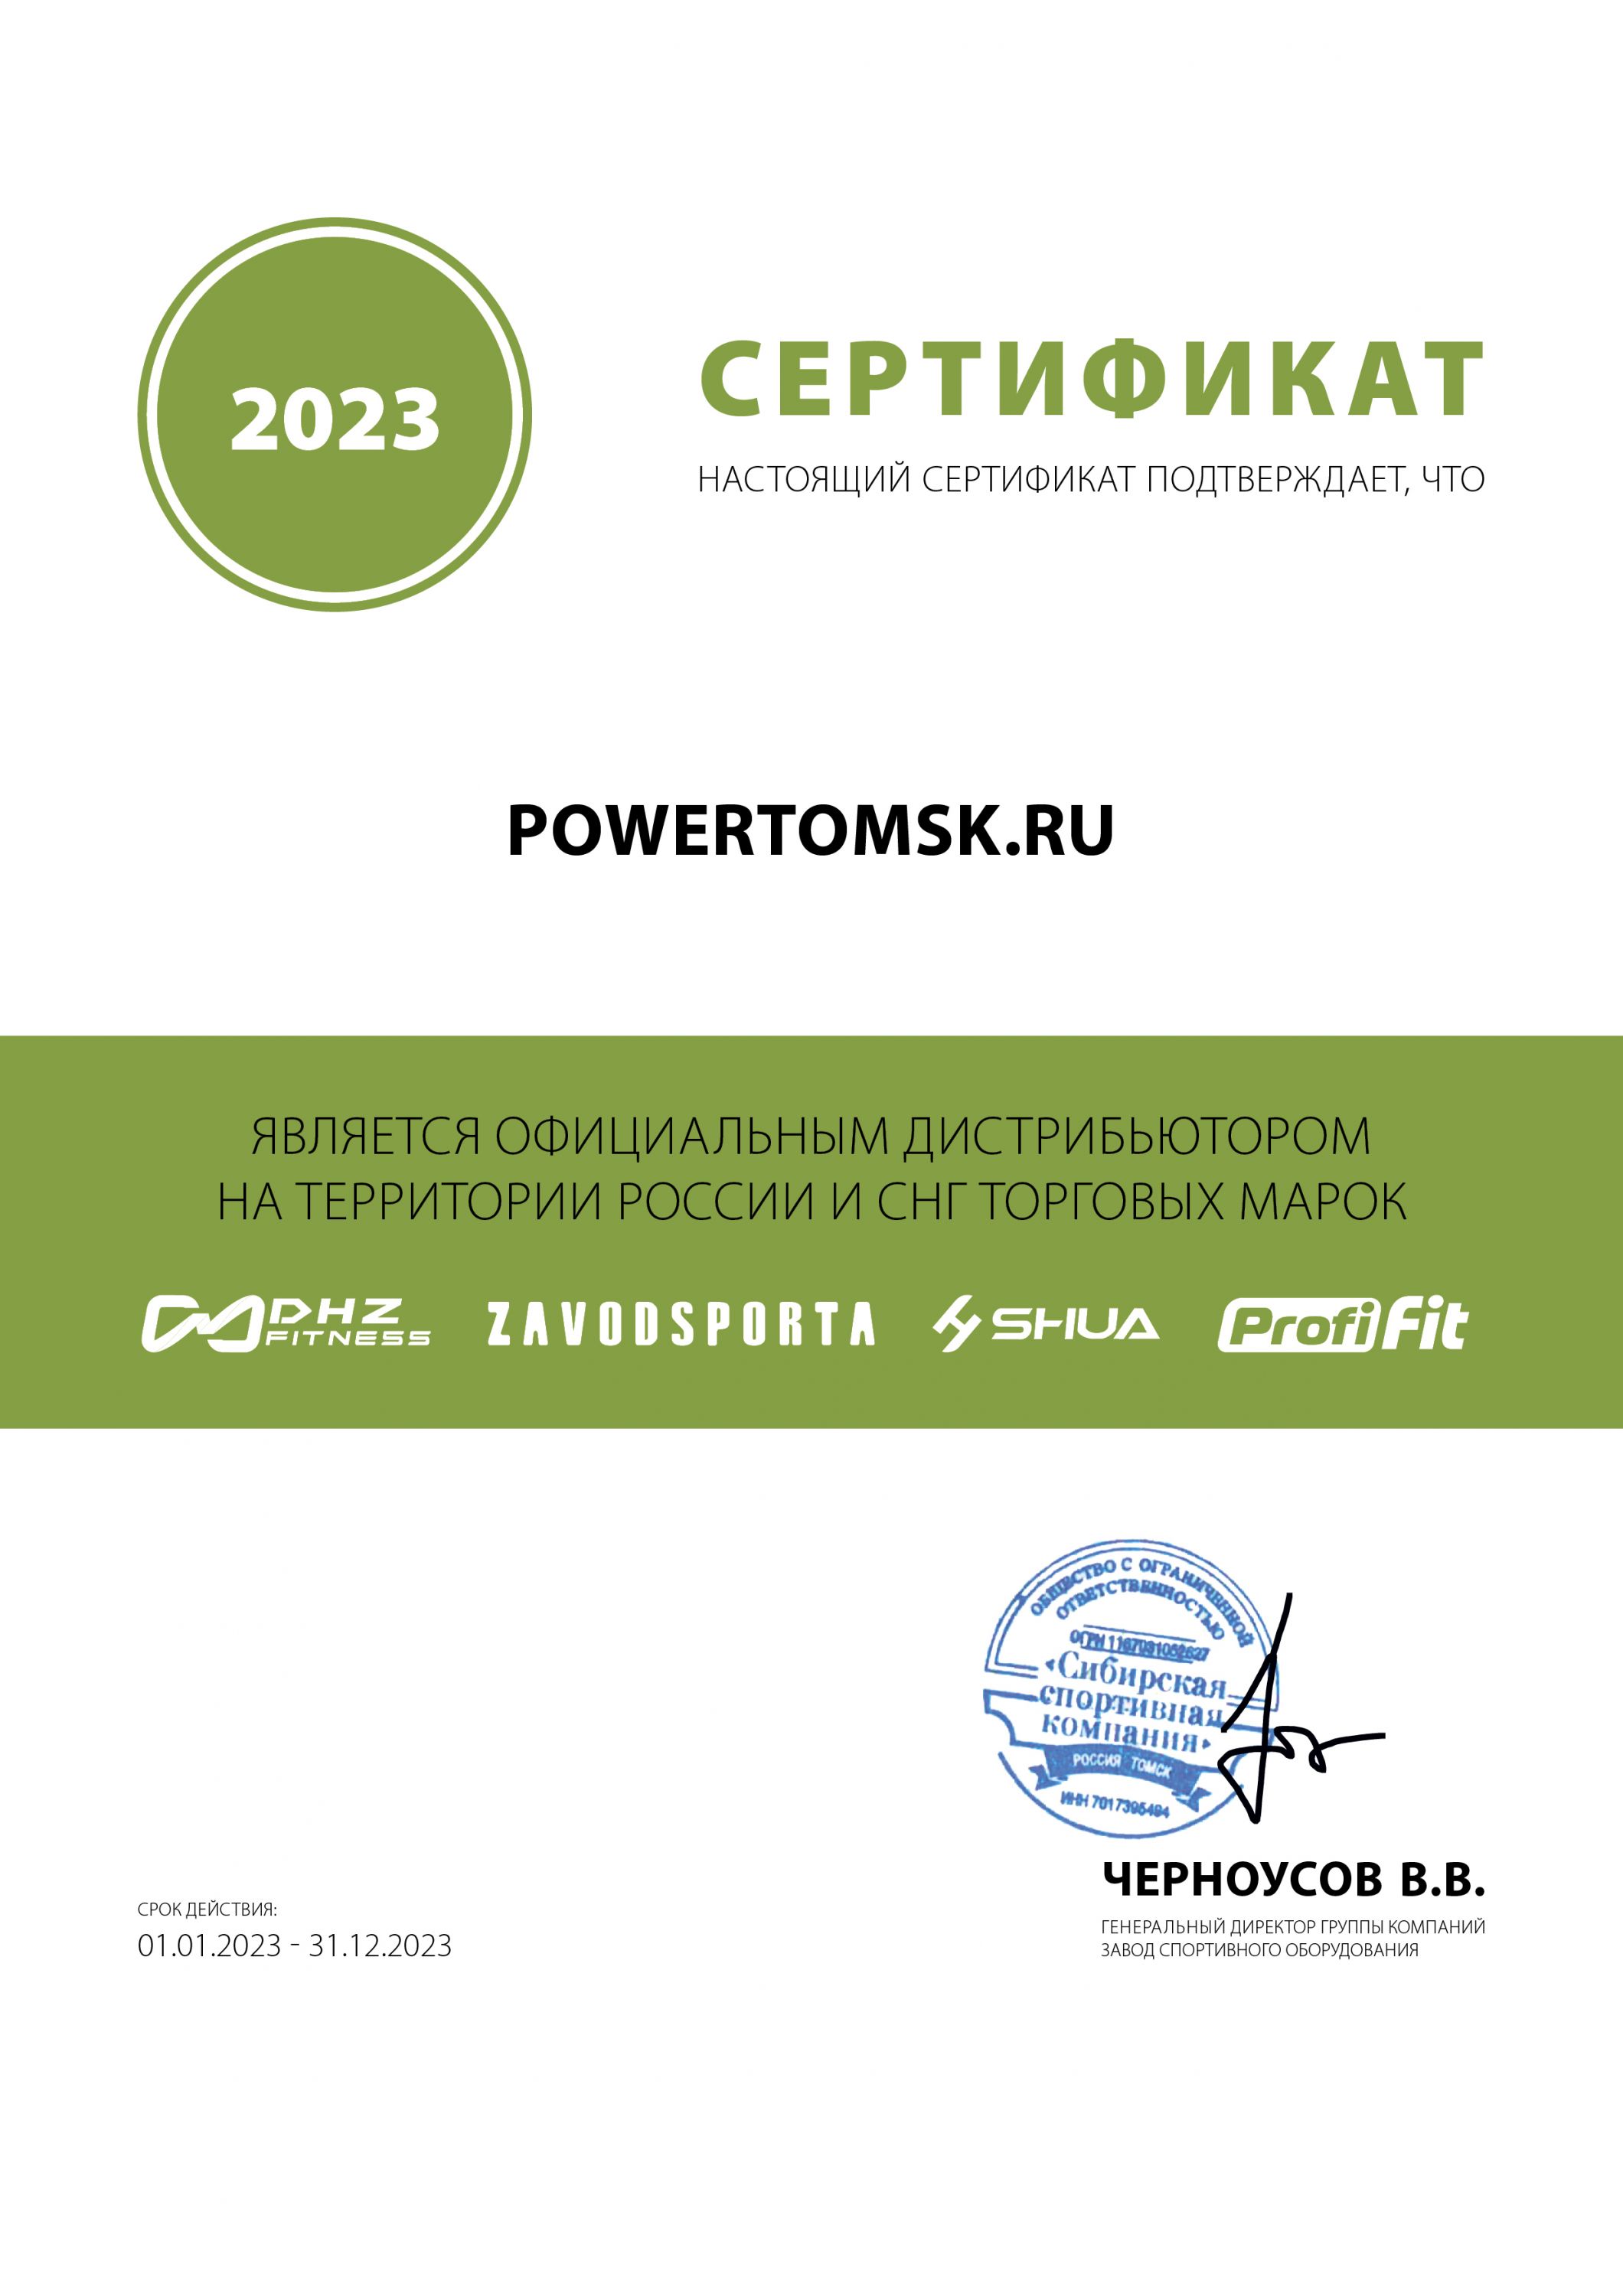 powertomsk.ru